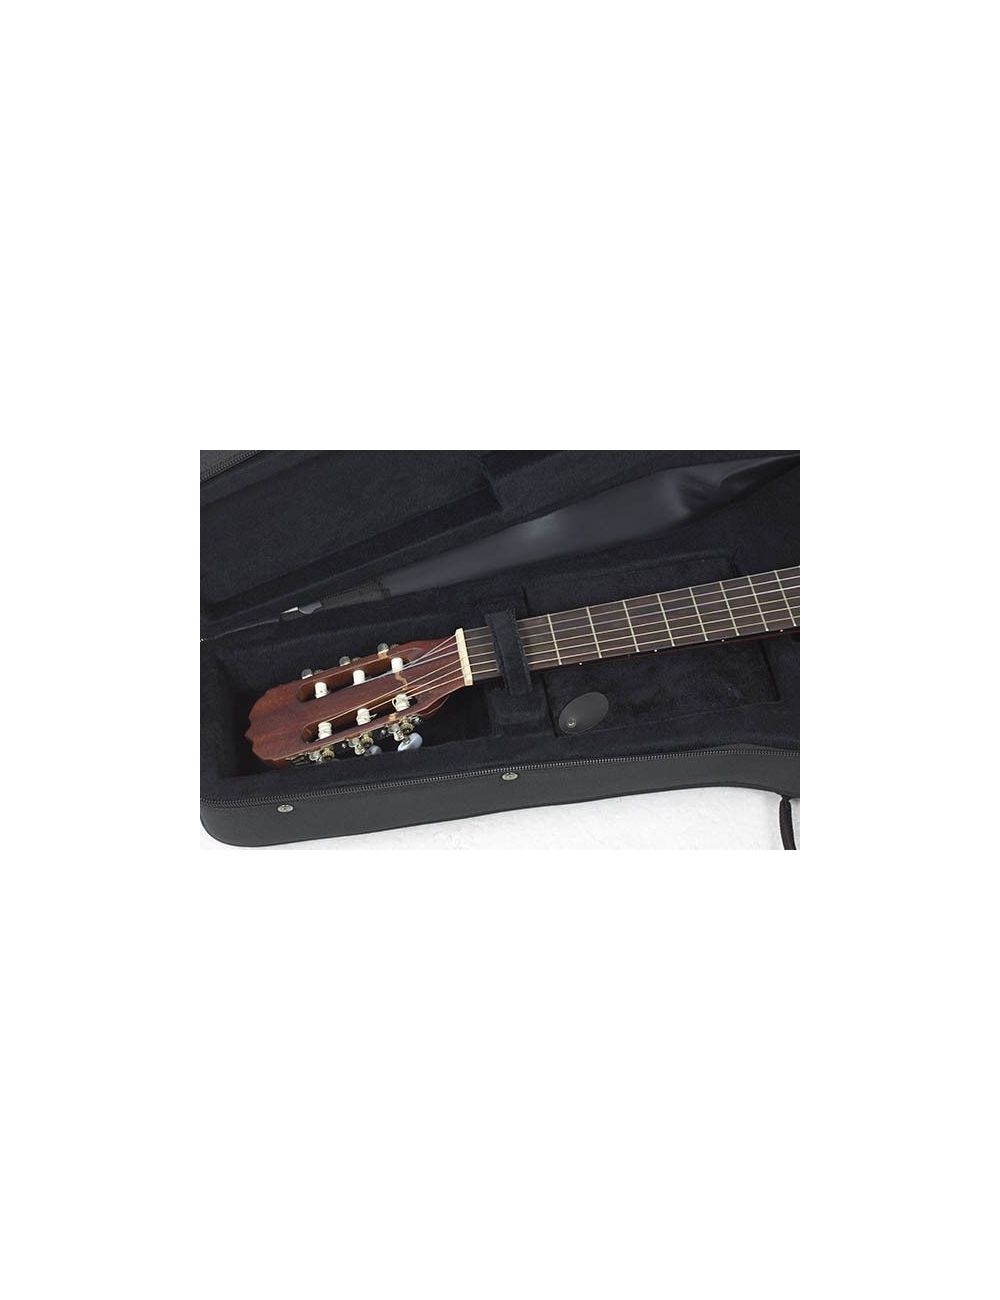 Estuche para guitarra clásica Ortola 7907 Espuma de poliestireno